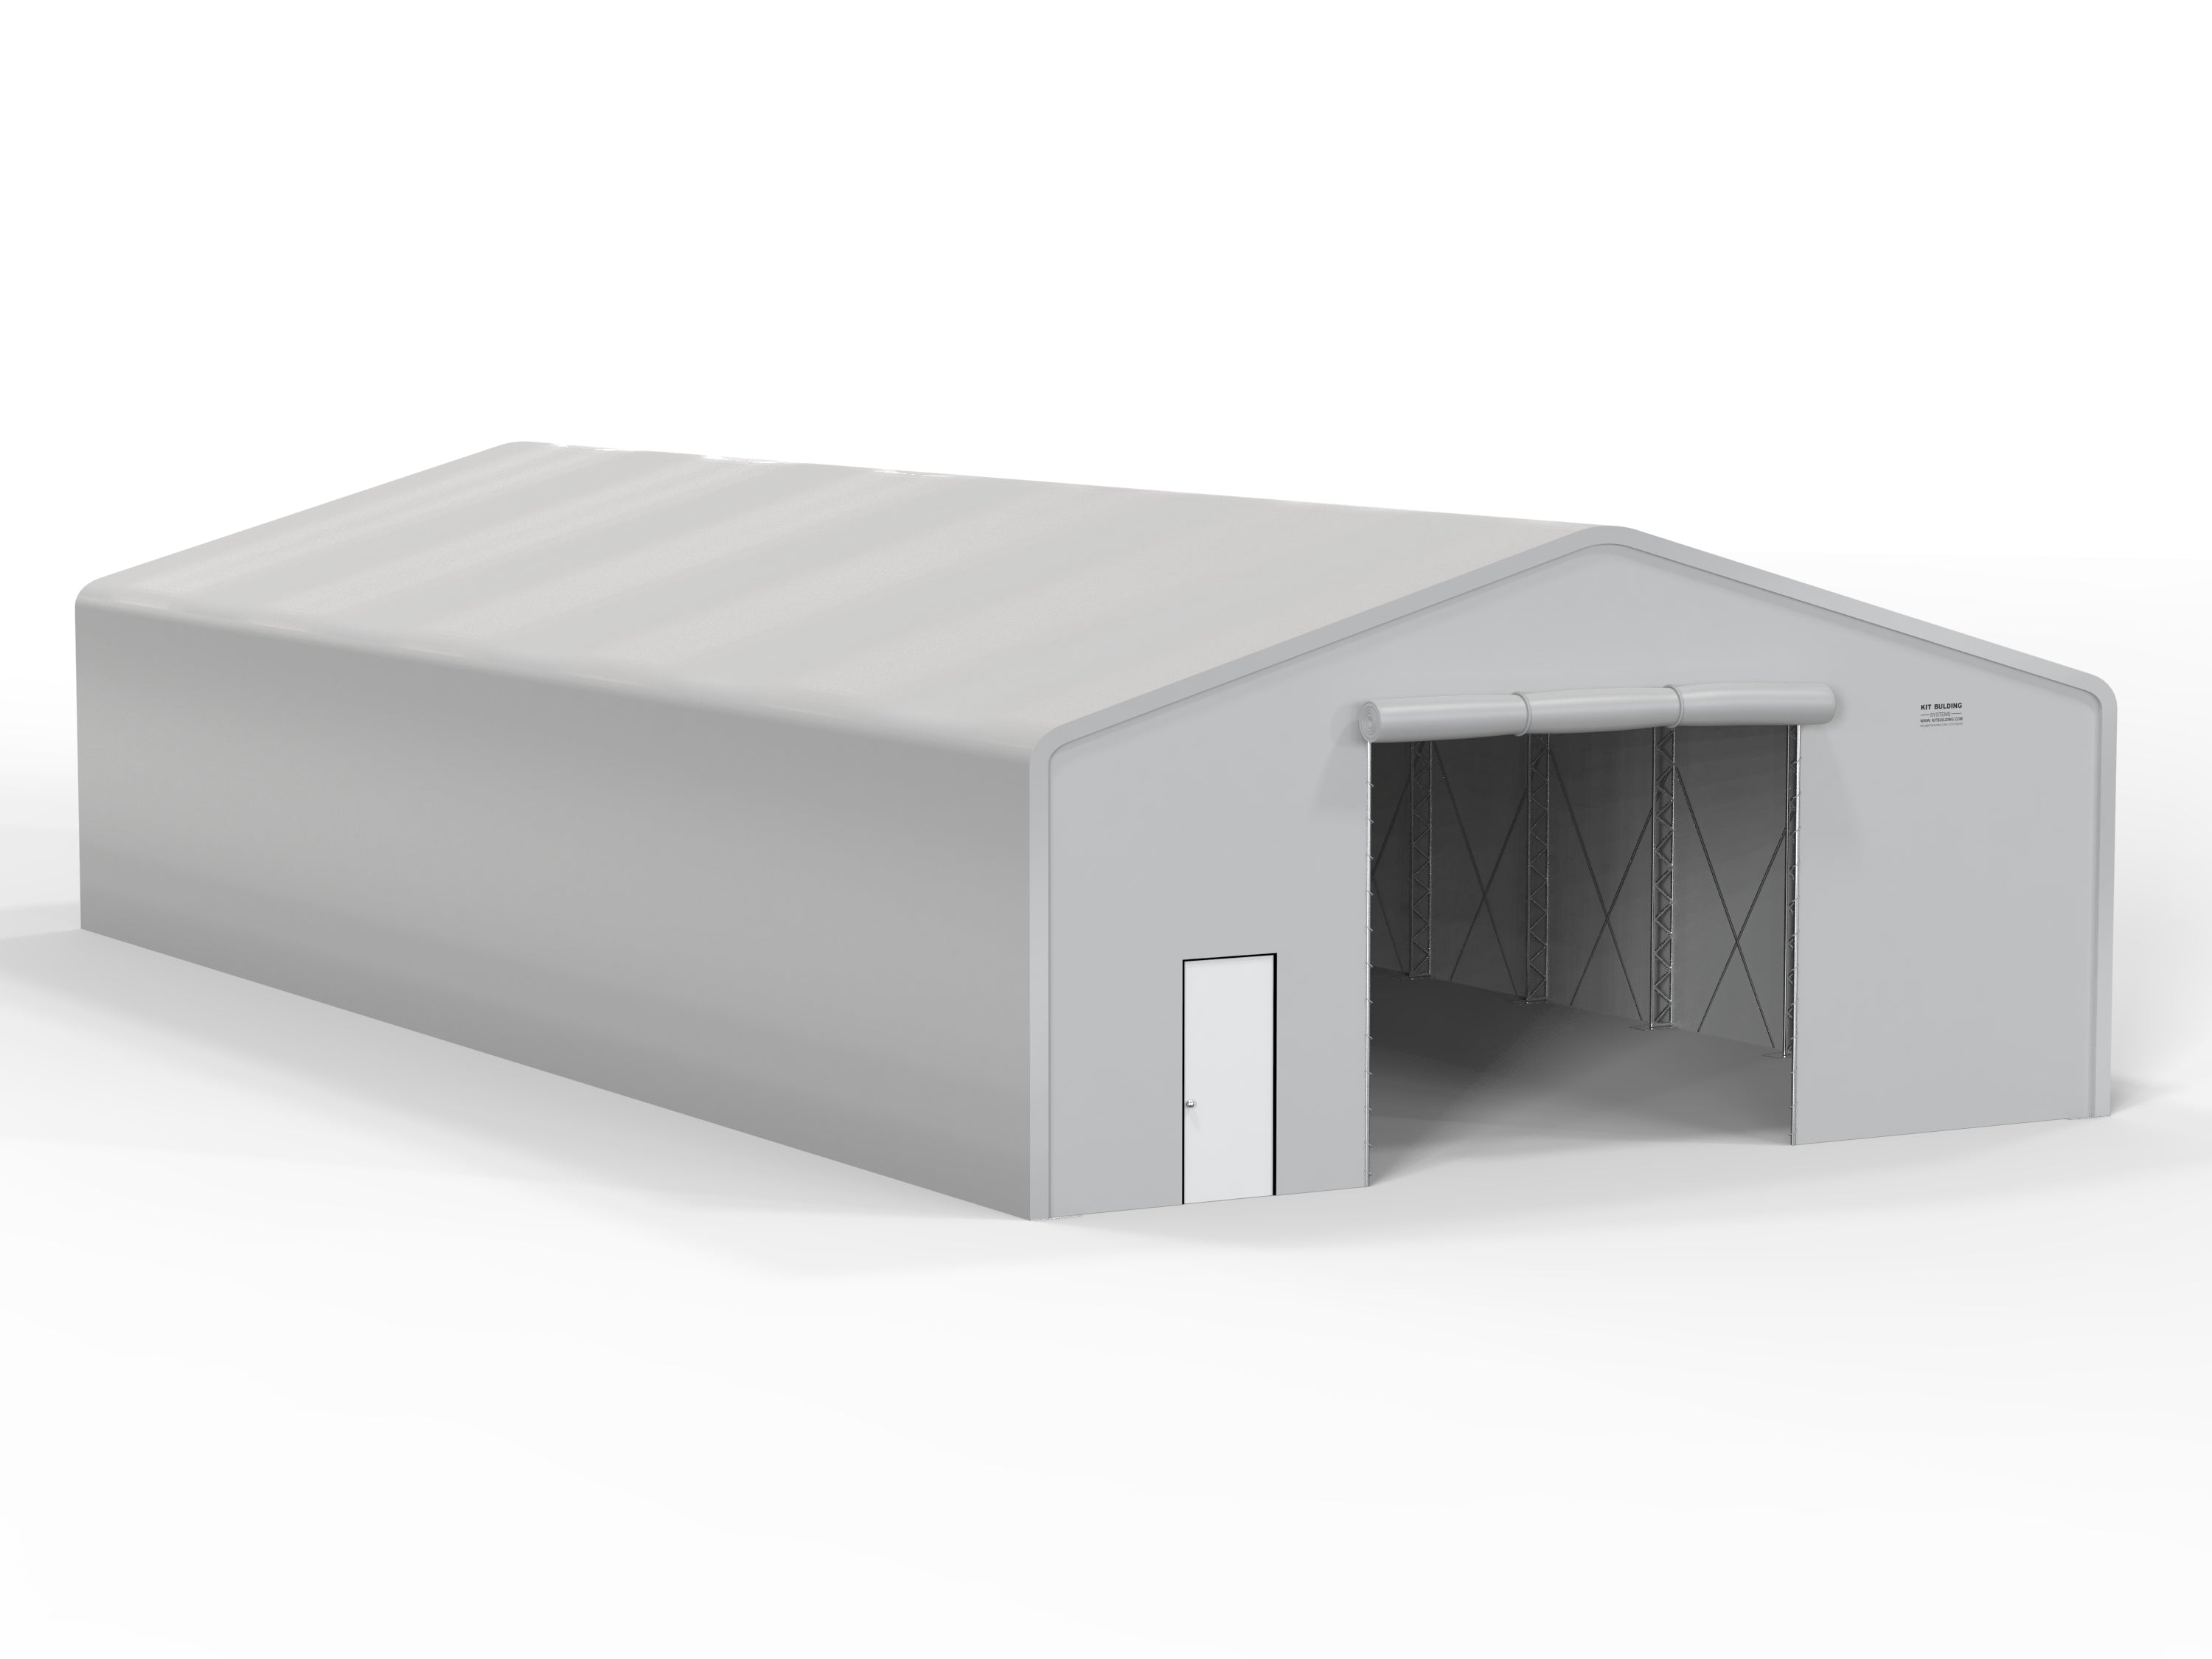 Double Truss PVC temporary storage building - Grey - Manual PVC Roll up Door